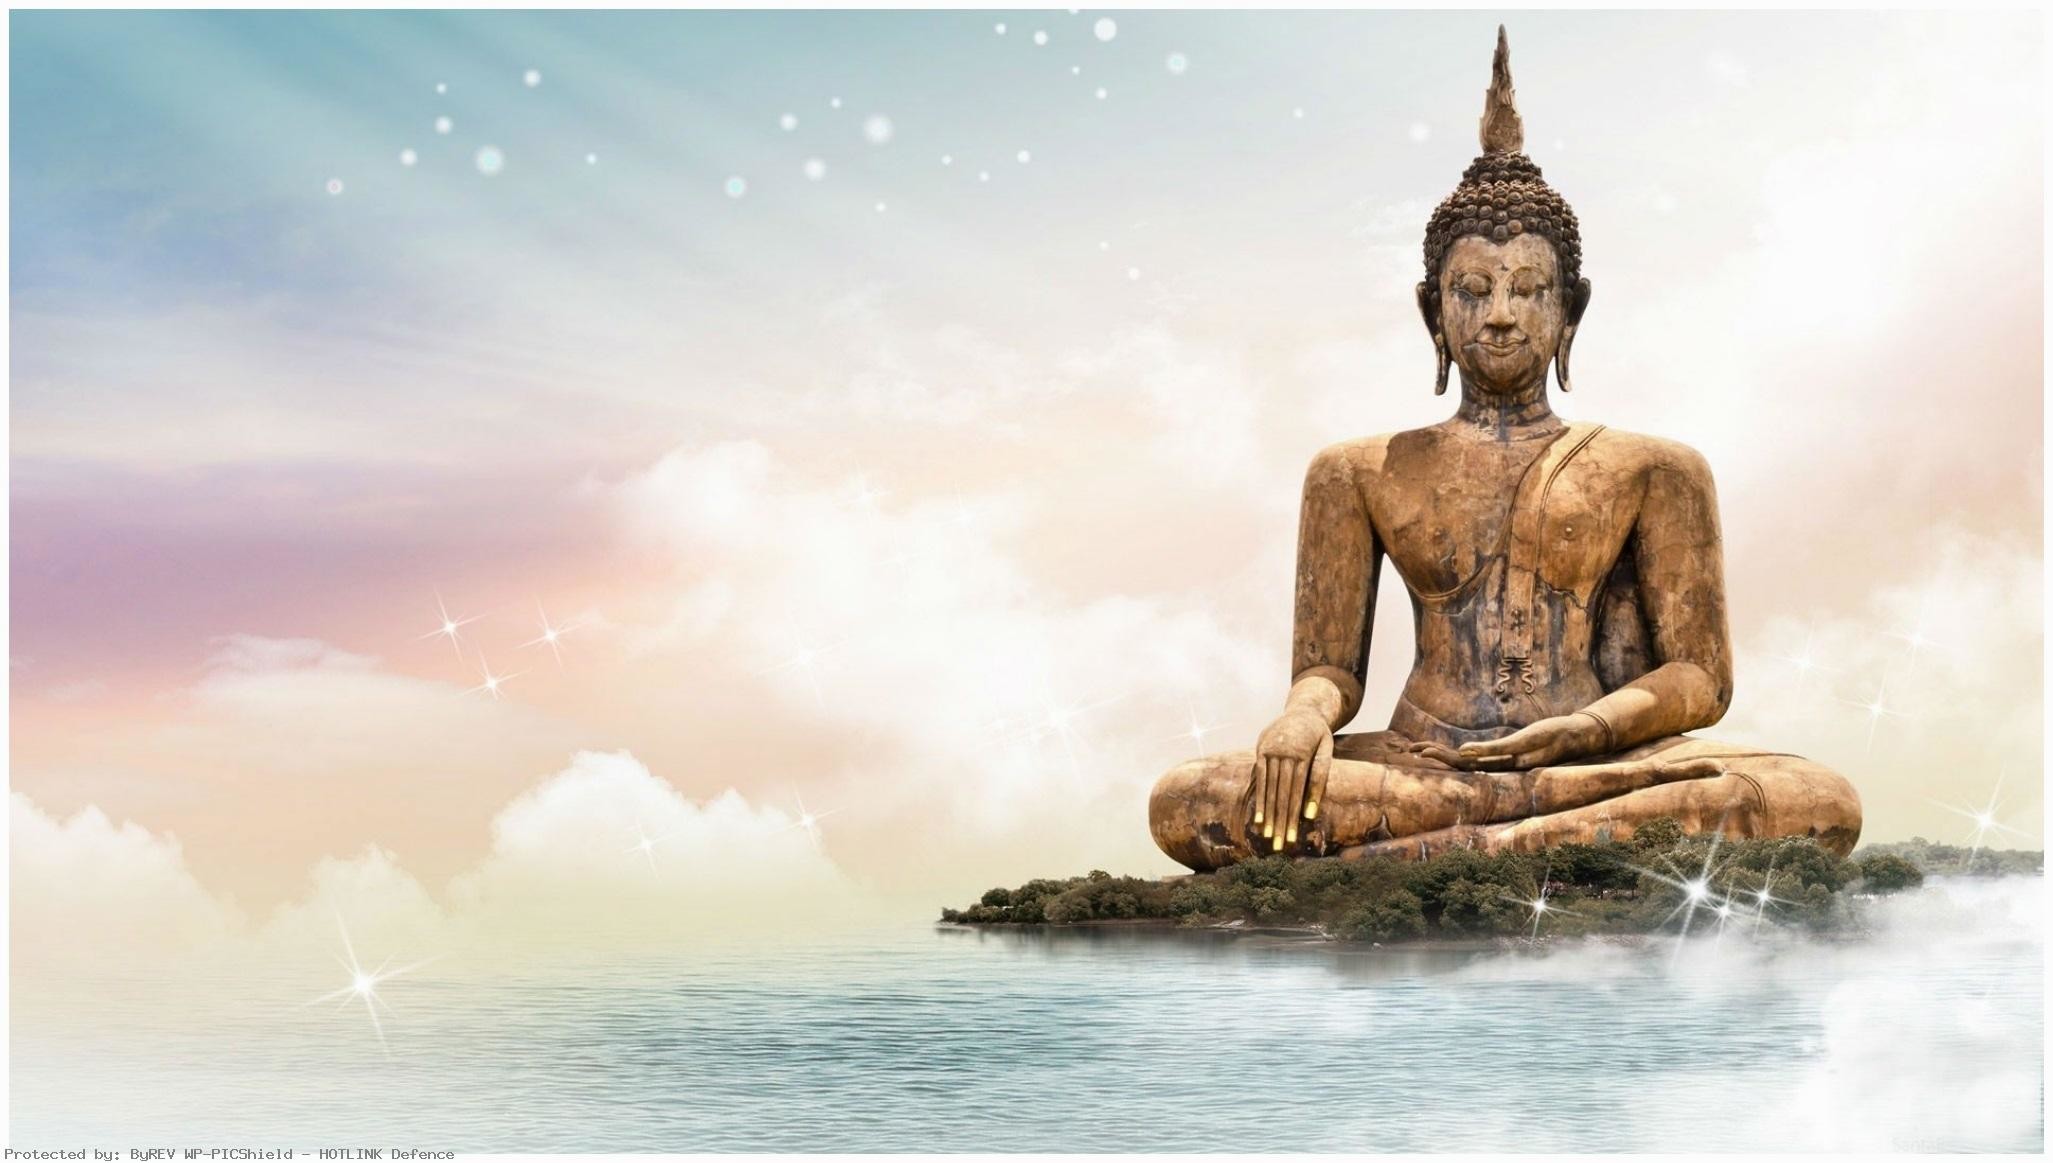 Download buddha wallpaper by nandhini55 - 826b - Free on ZEDGE™ now. Browse  millions of popular … | Buddha wallpaper iphone, Buddha image, Buddha image  wallpaper hd